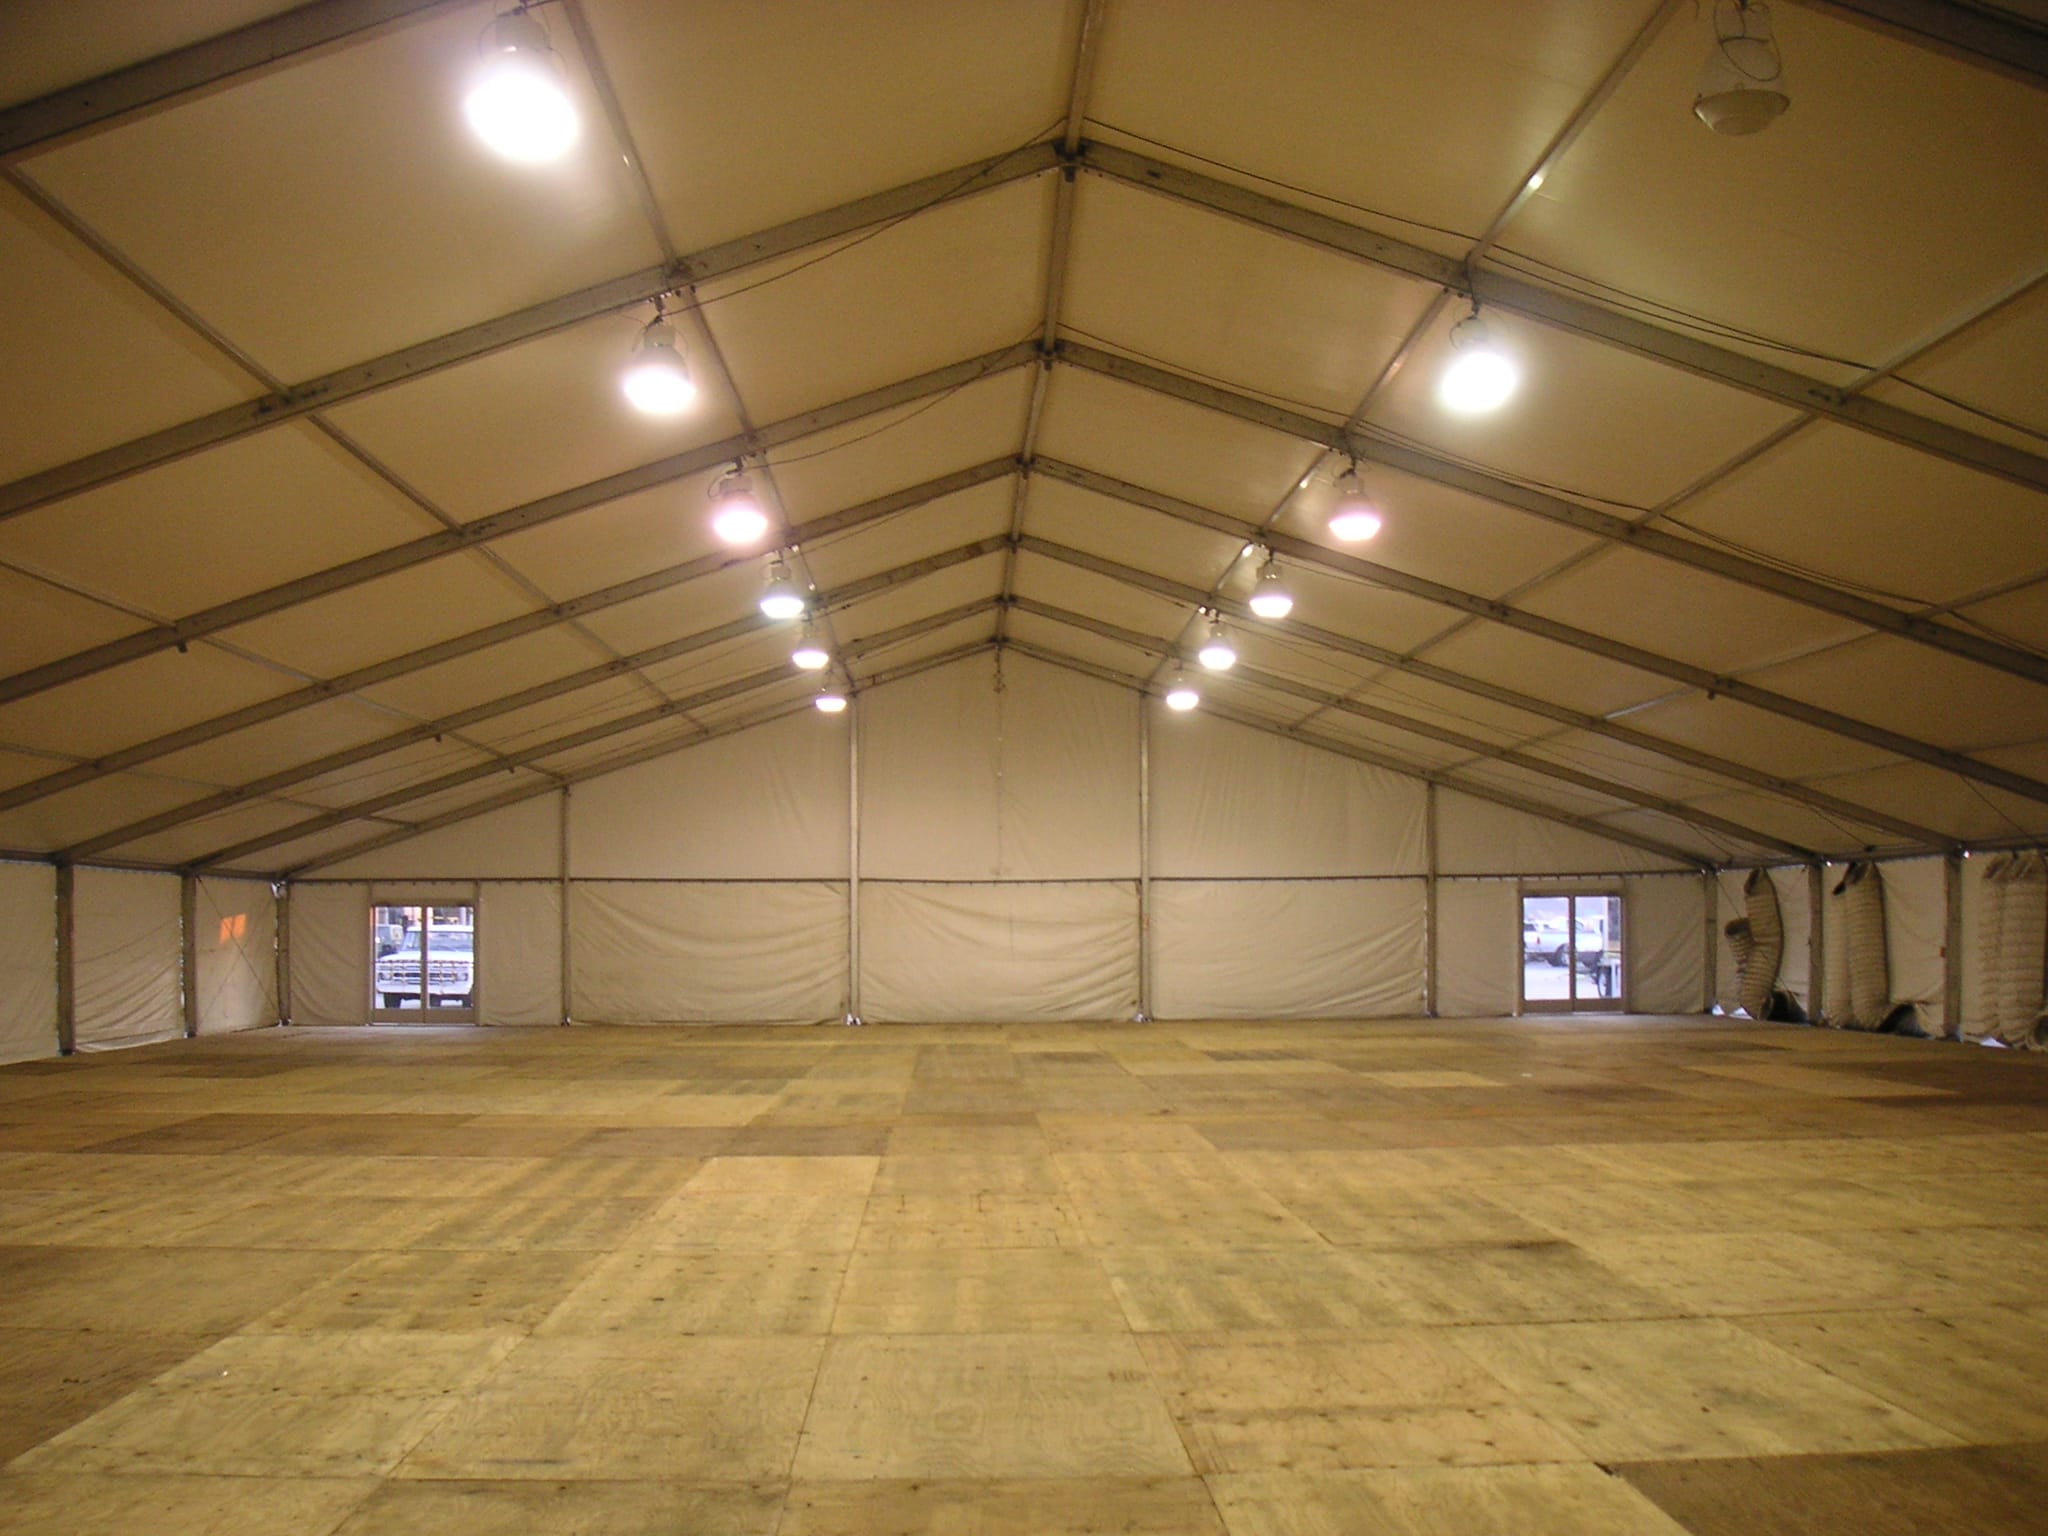 12000 Sq Foot Wood Flooring in Clear Span Tent - American Pavilion